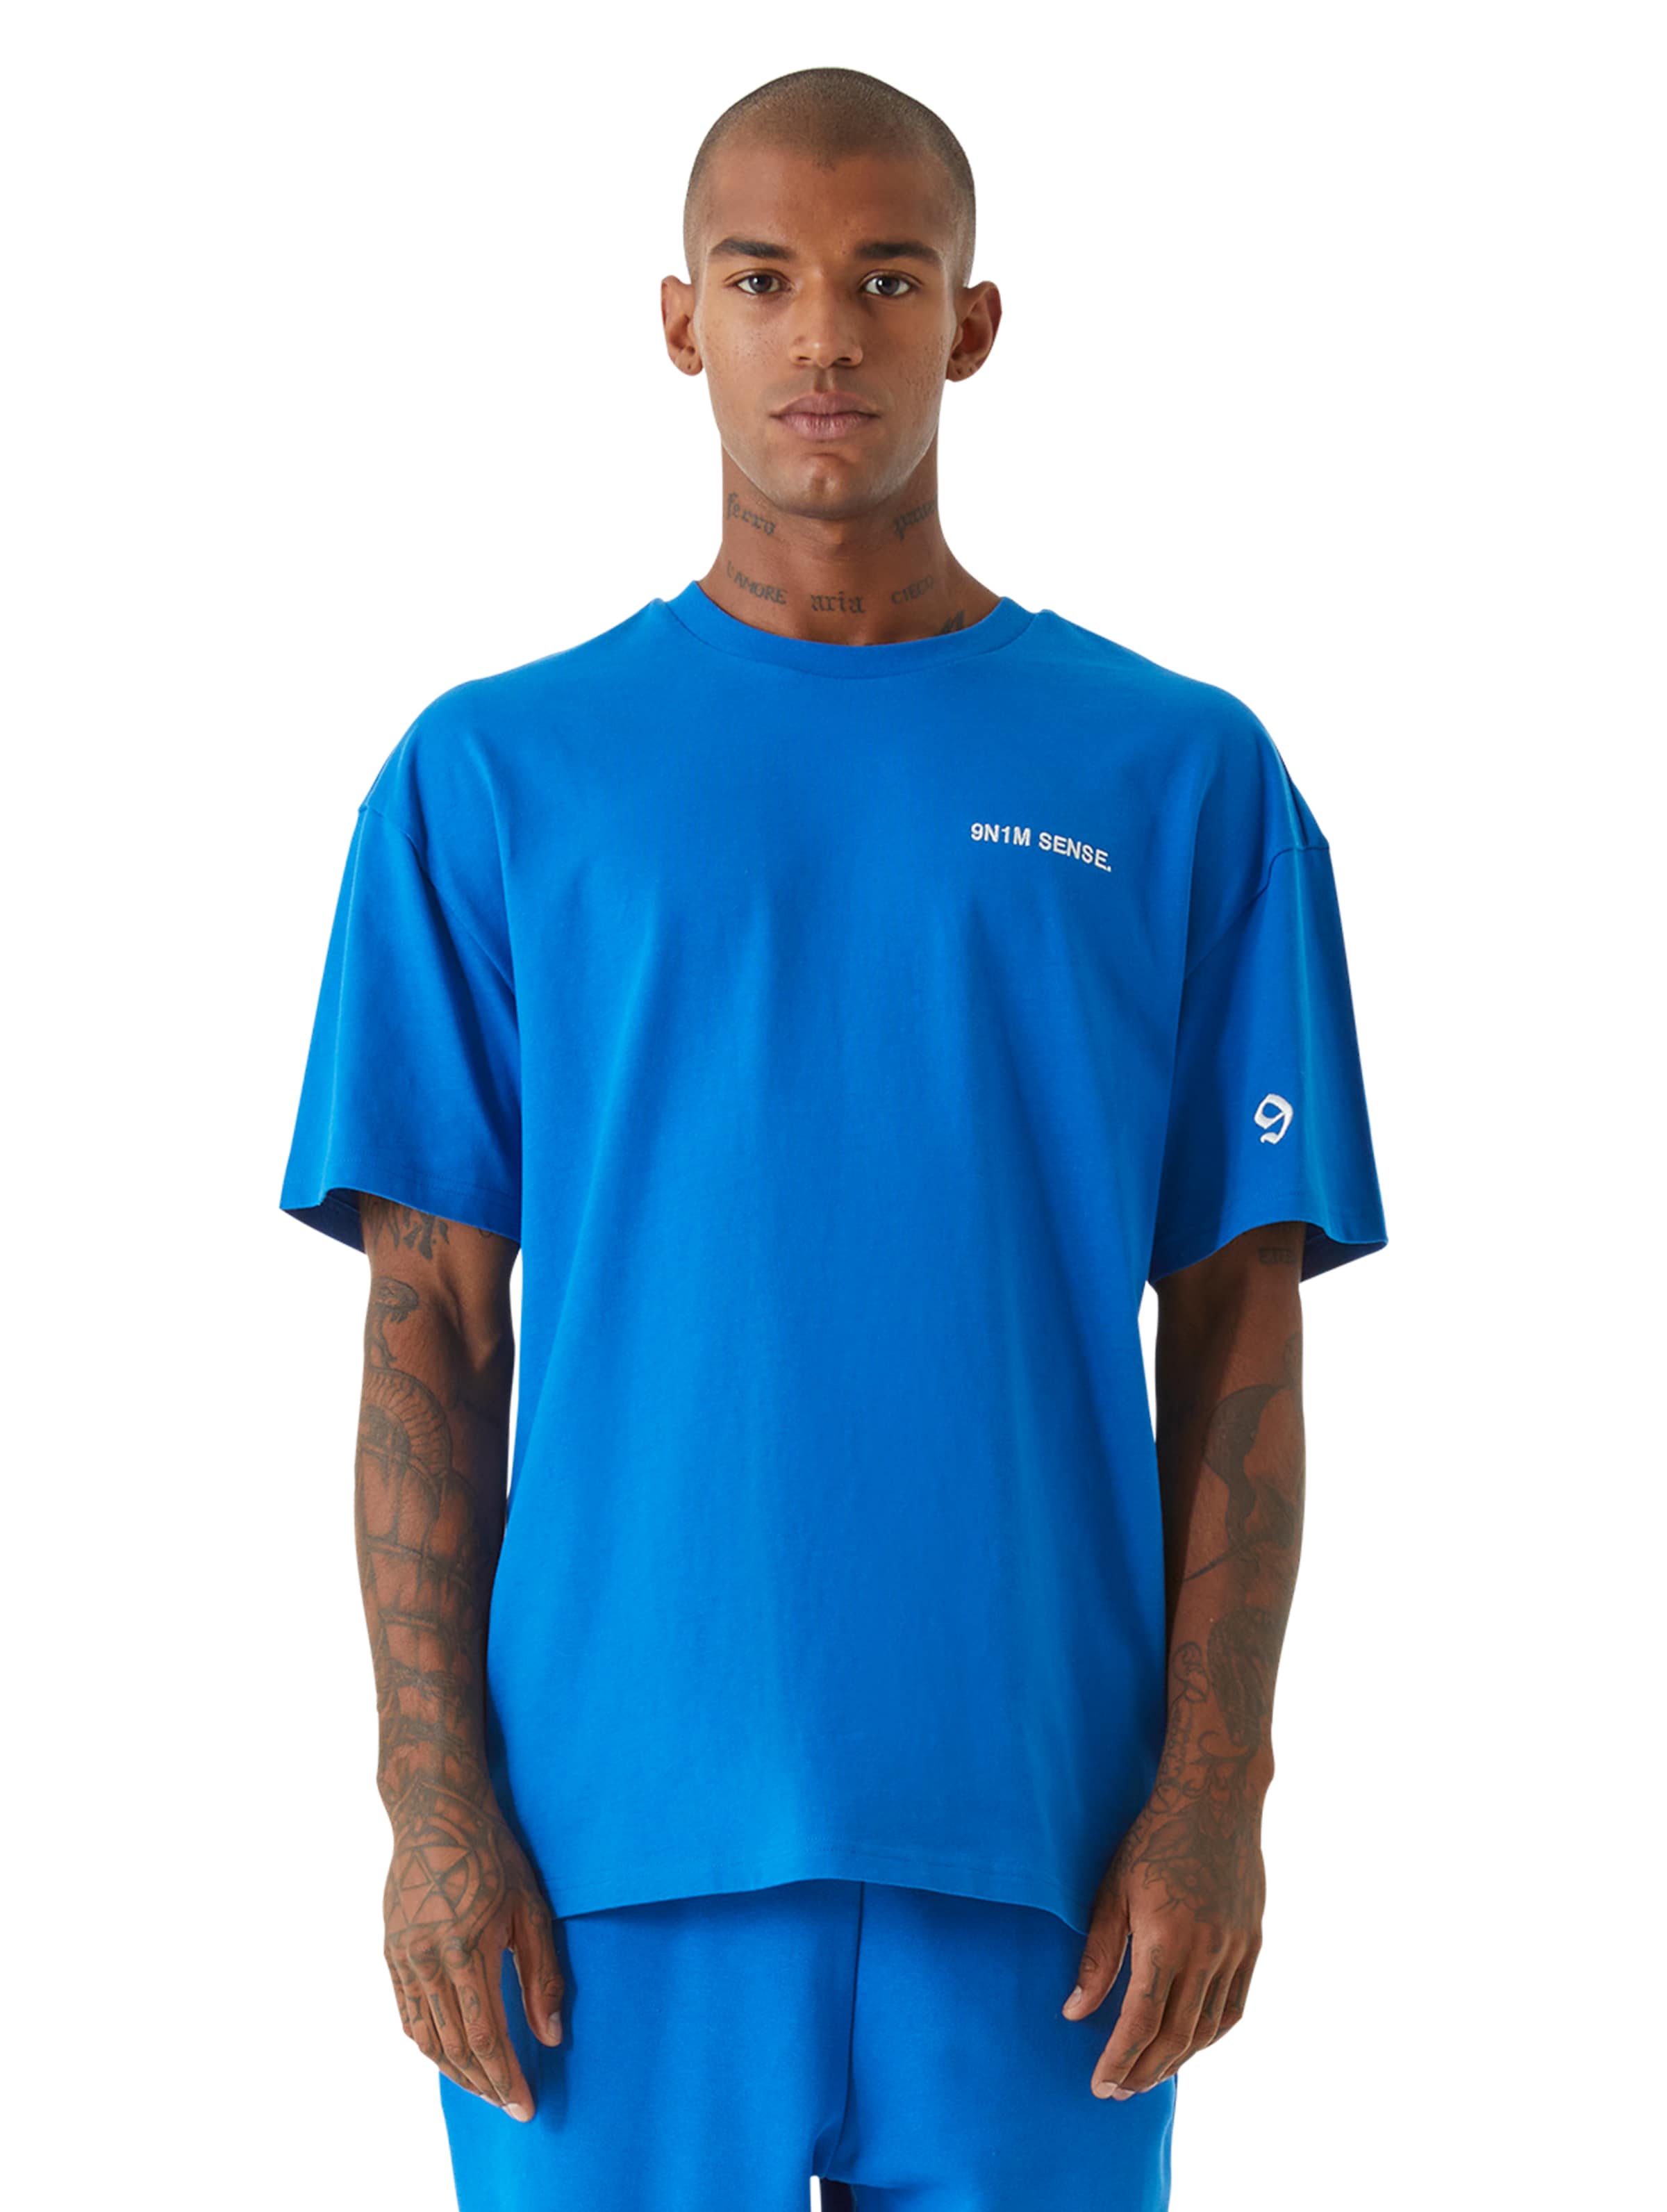 9N1M SENSE 9n1m Sense Essential T-Shirt Mannen op kleur blauw, Maat 2XL